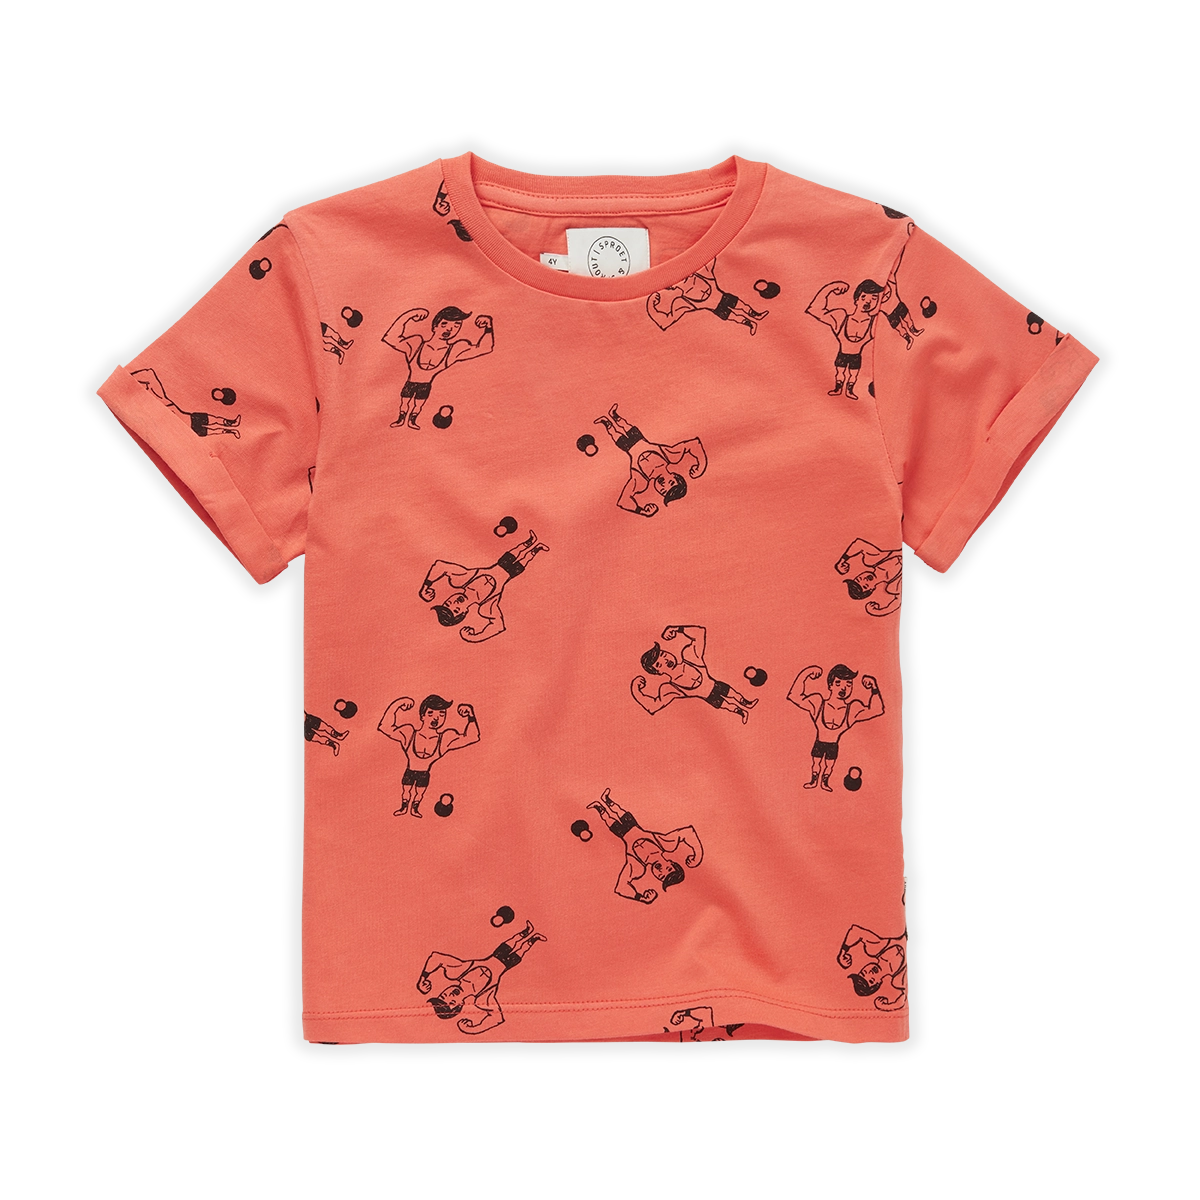 T-Shirt Strong Men Print – coral pink